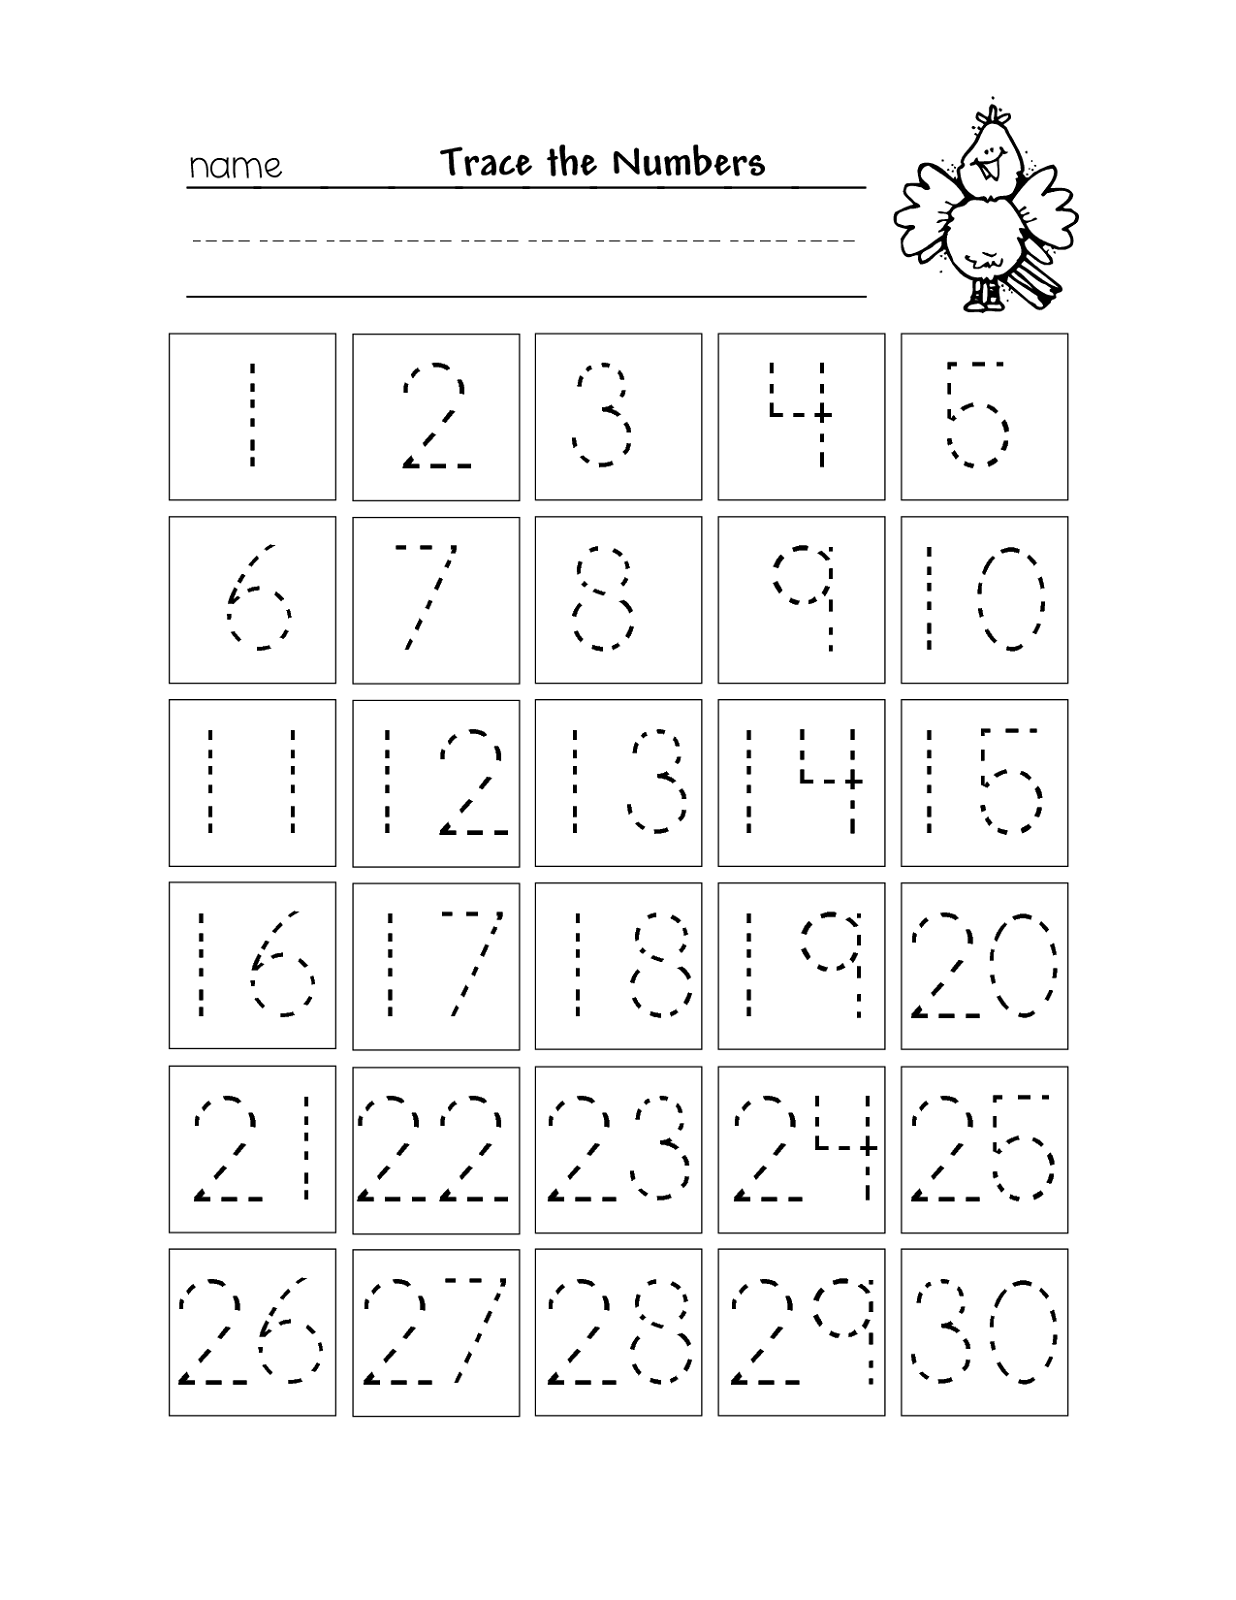 tracing-numbers-1-30-worksheets-worksheetscity